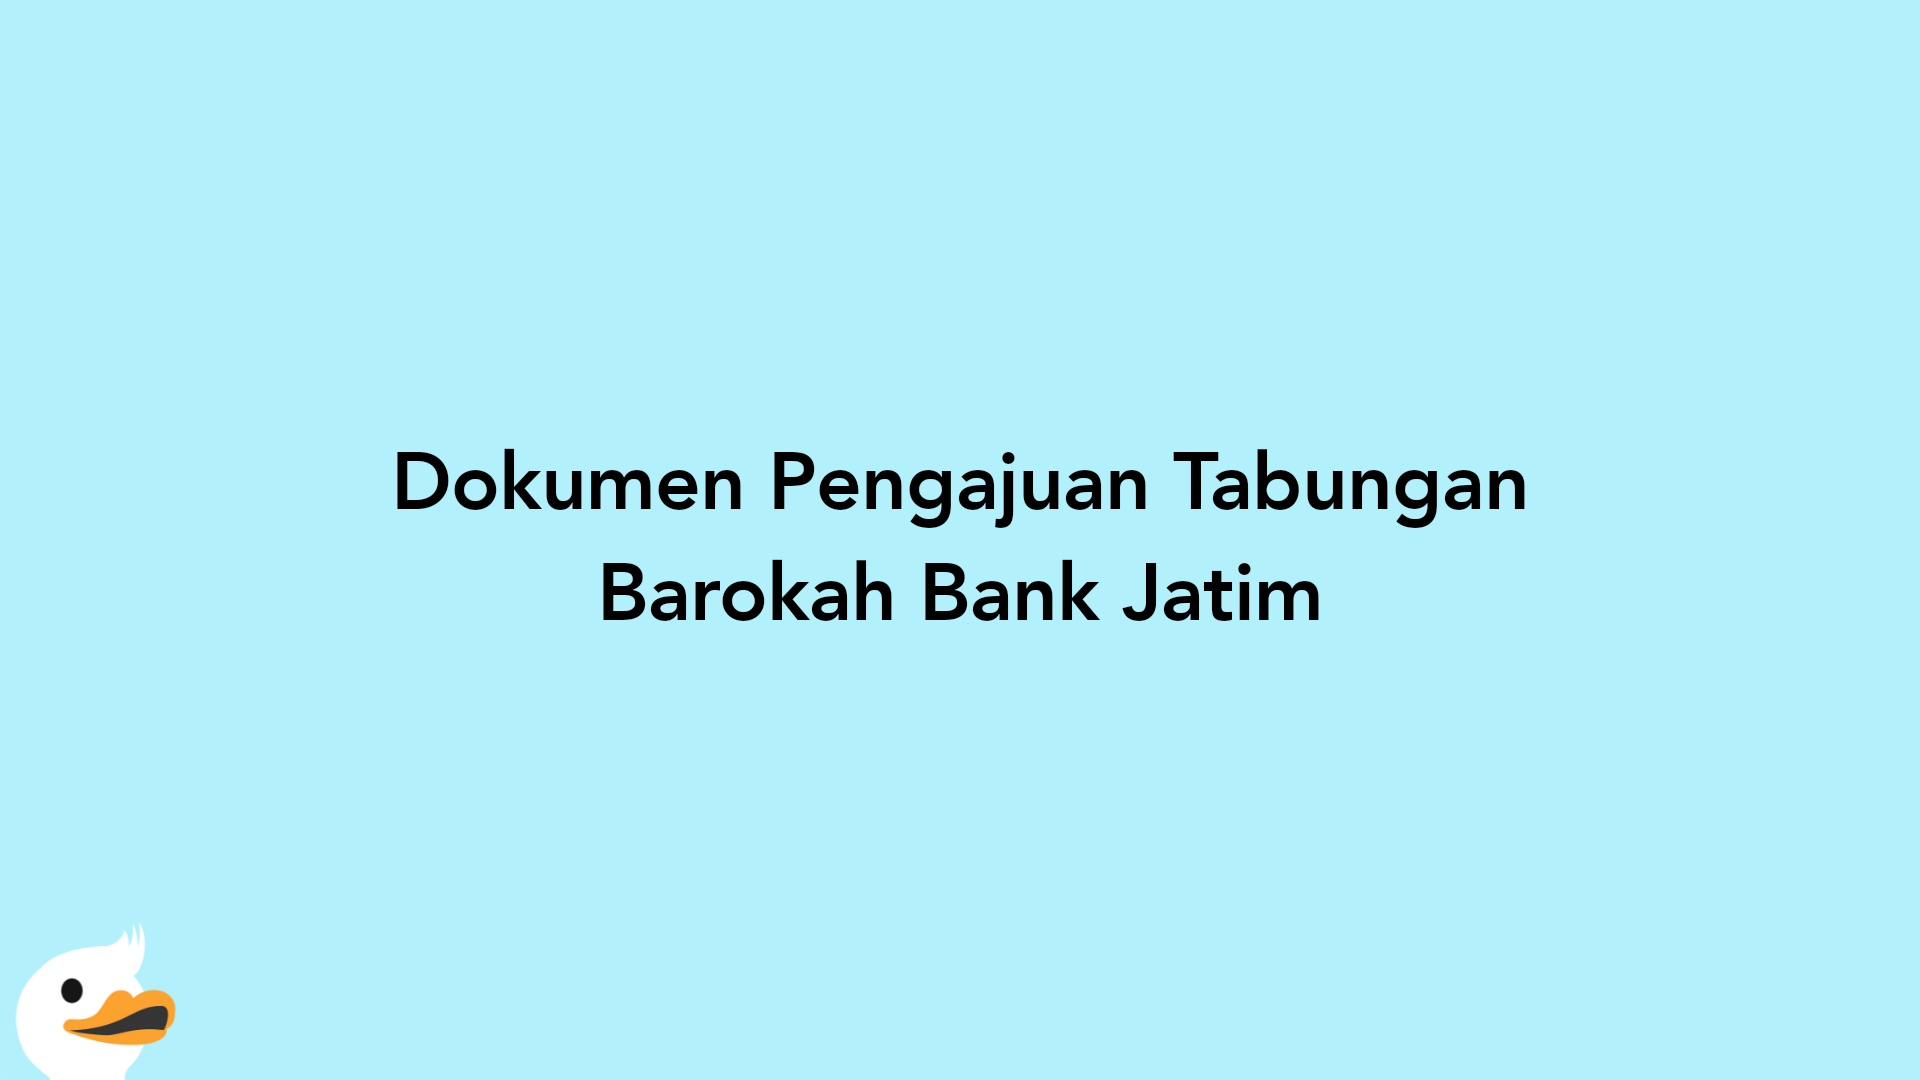 Dokumen Pengajuan Tabungan Barokah Bank Jatim